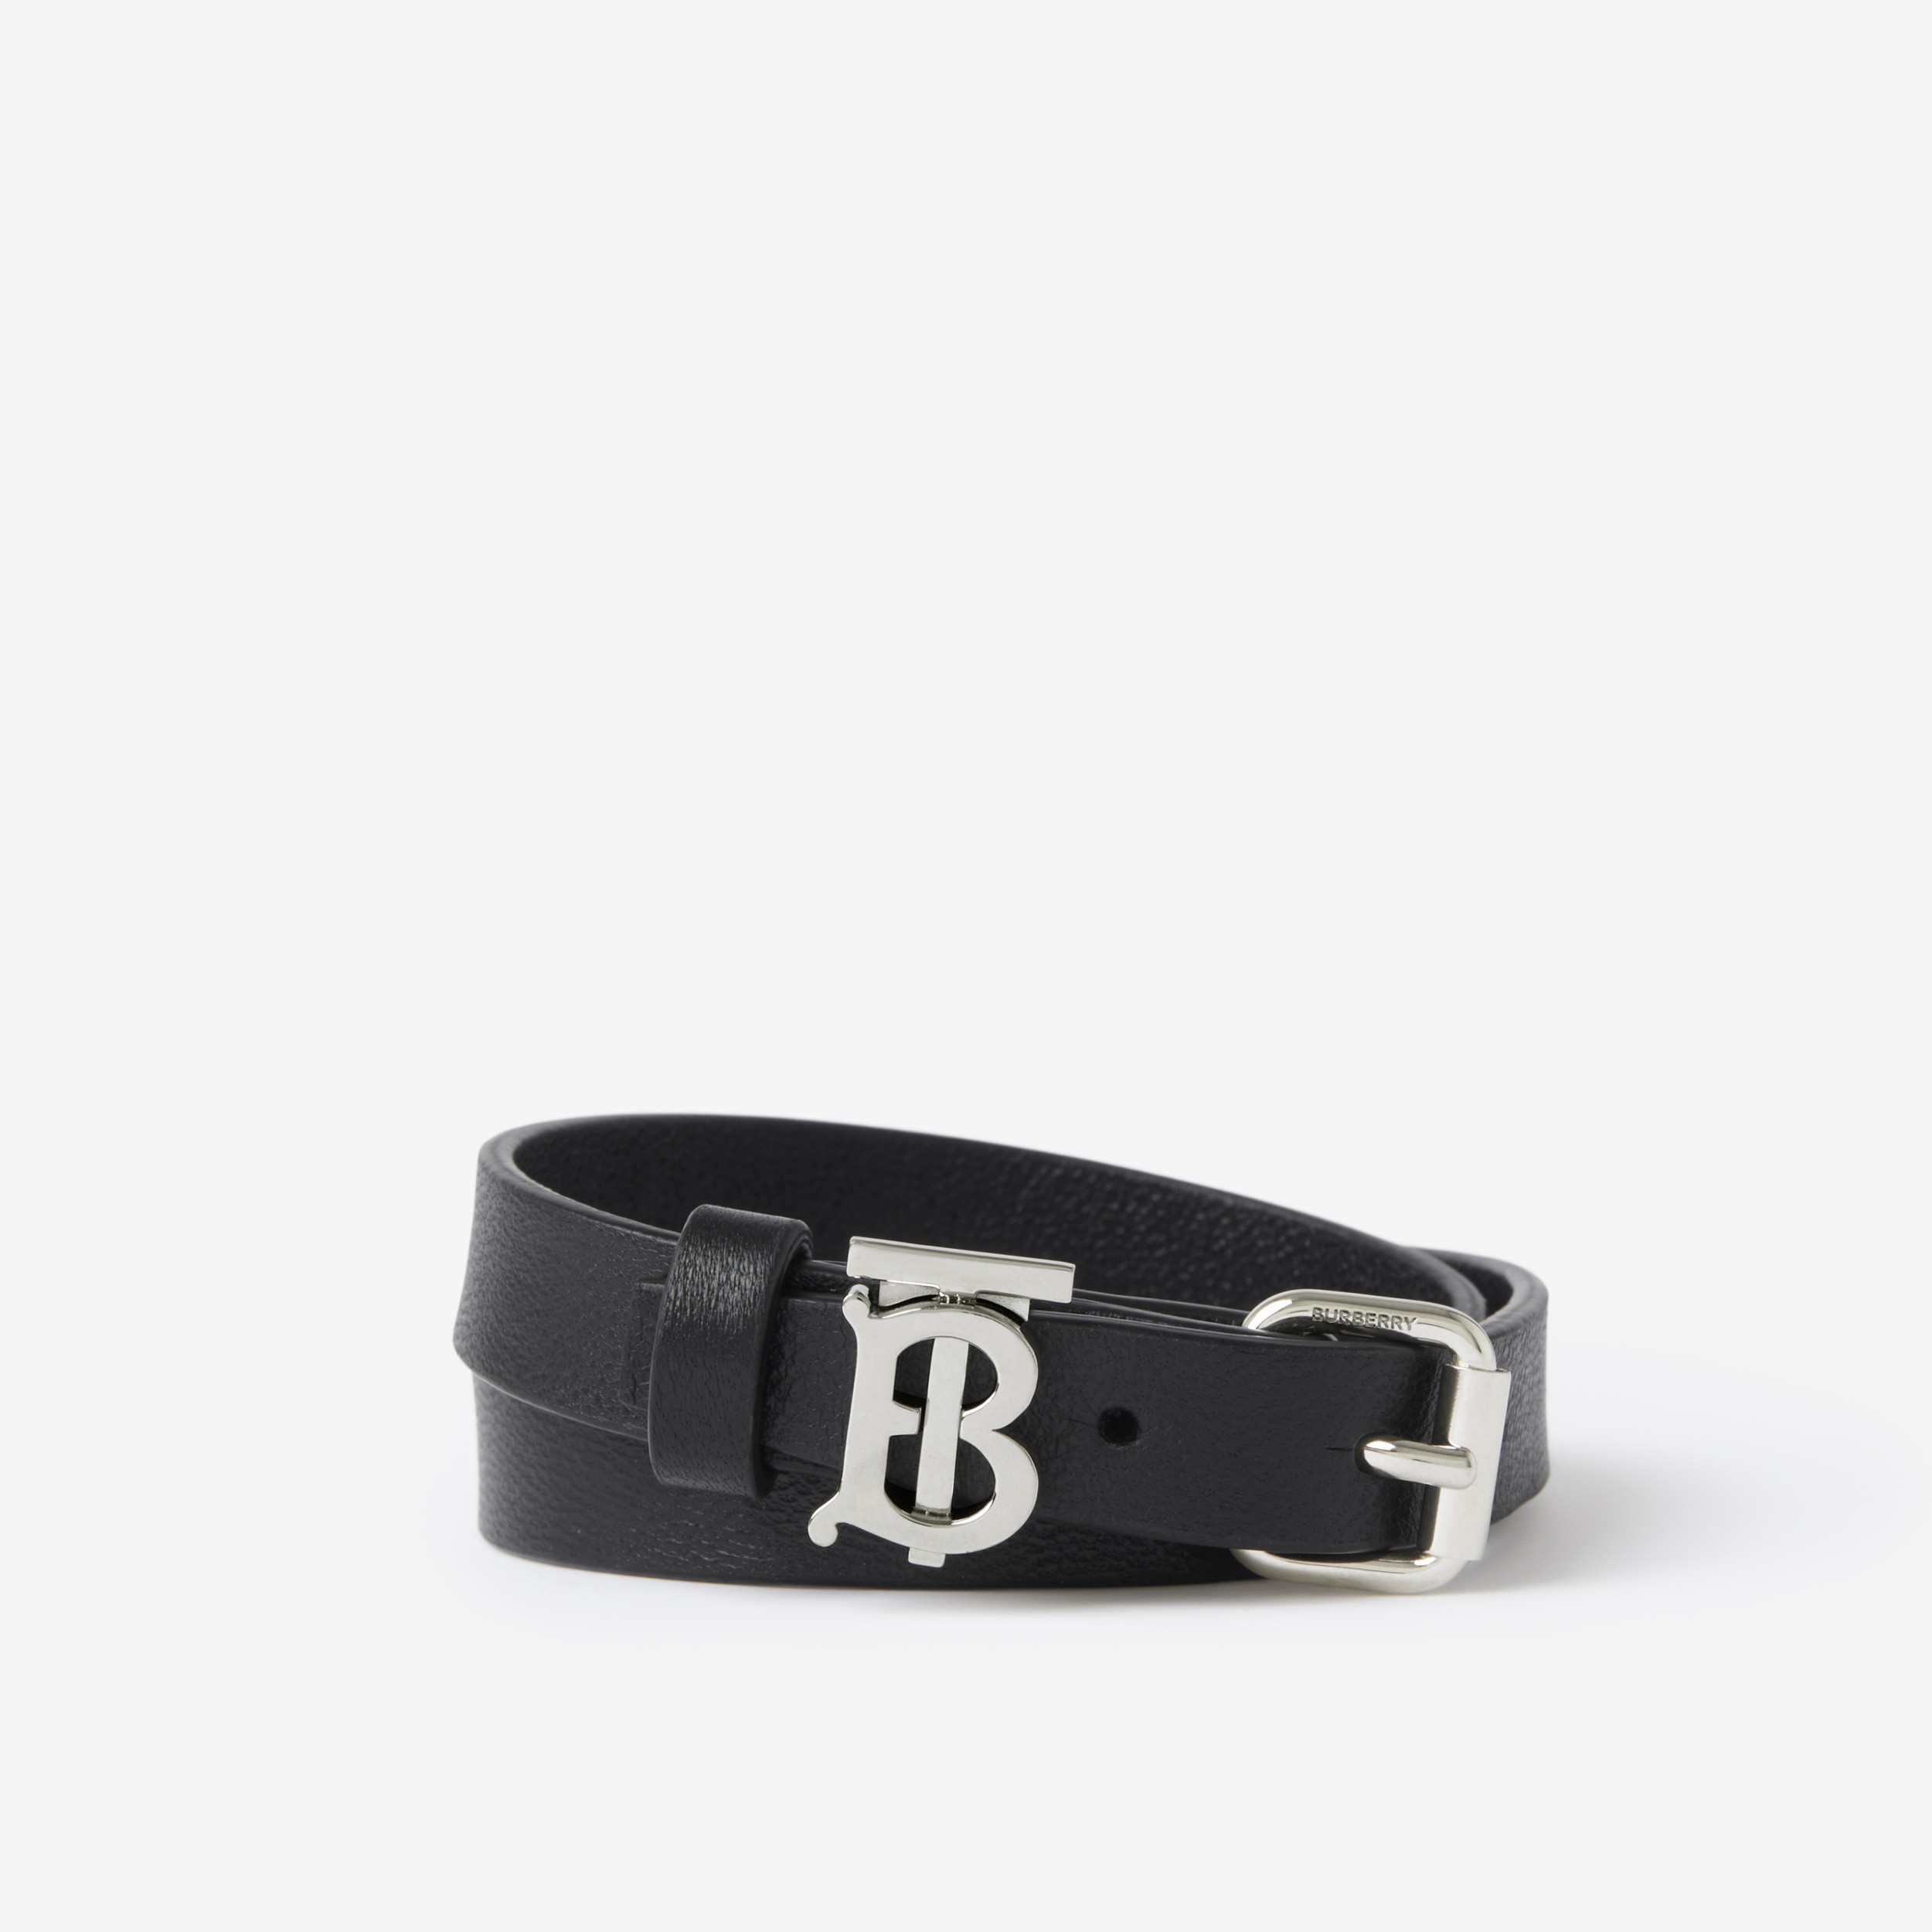 Actualizar 36+ imagen burberry leather bracelet